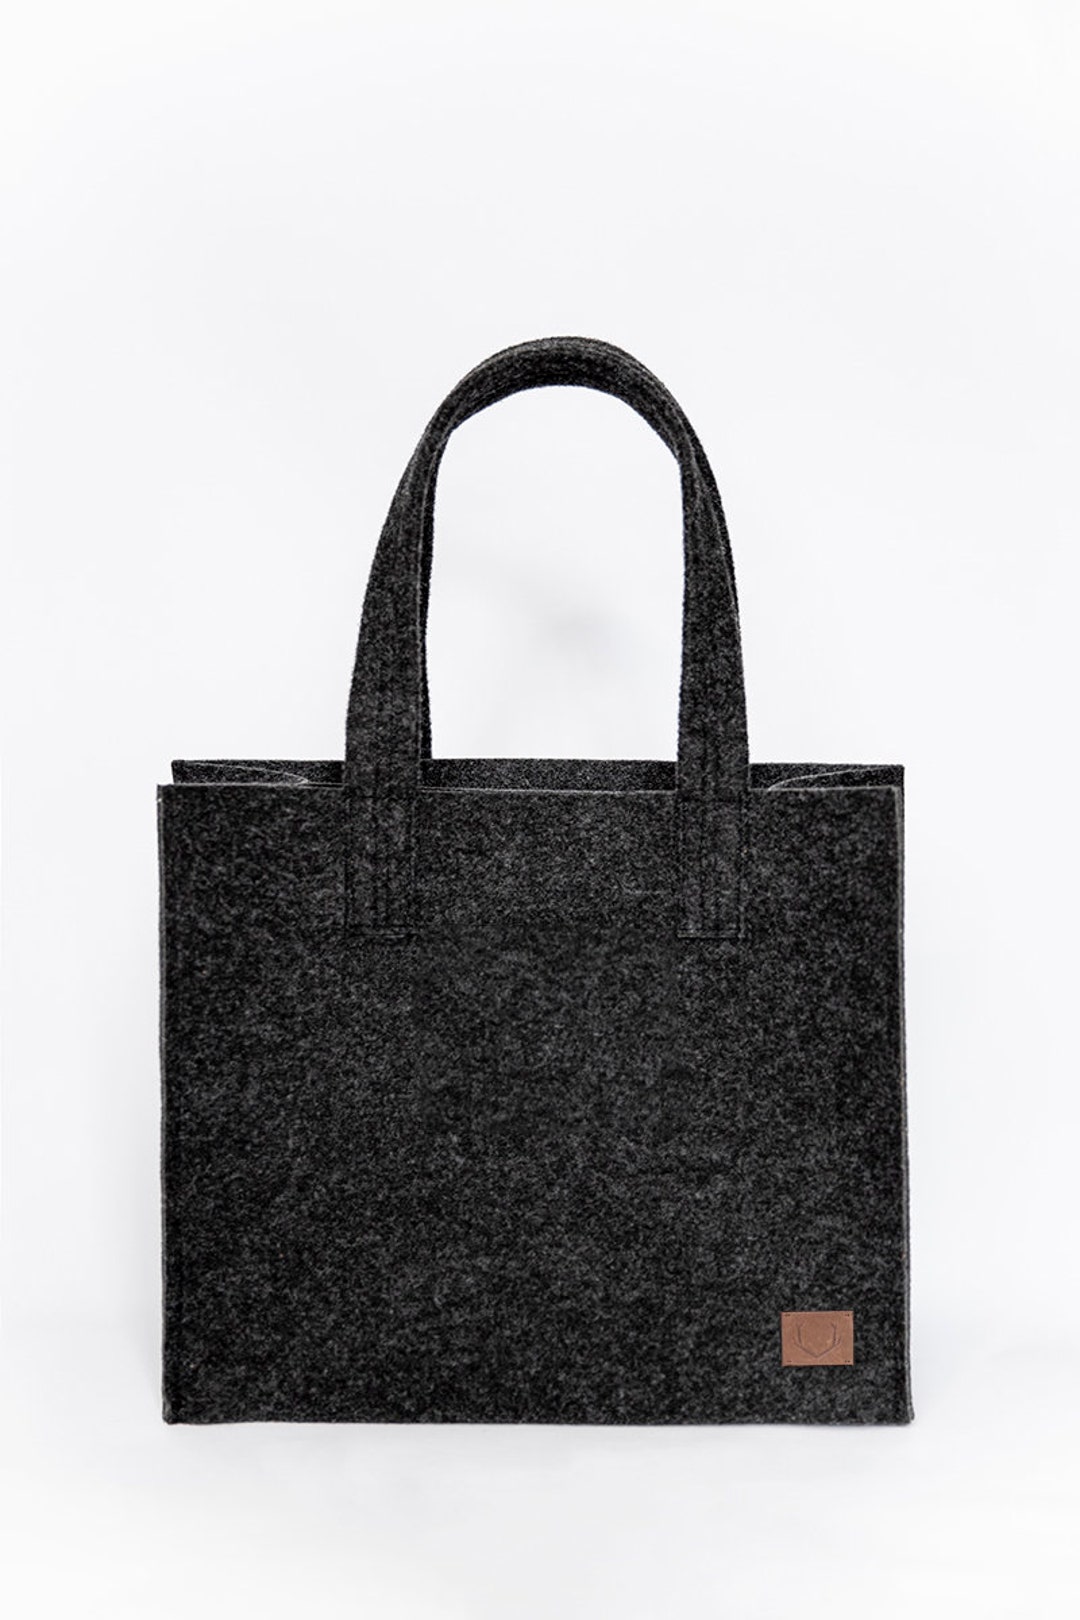 Tote Bag / Felt Office Bag / Shopper Bag / Black Felt Tote Bag - Etsy